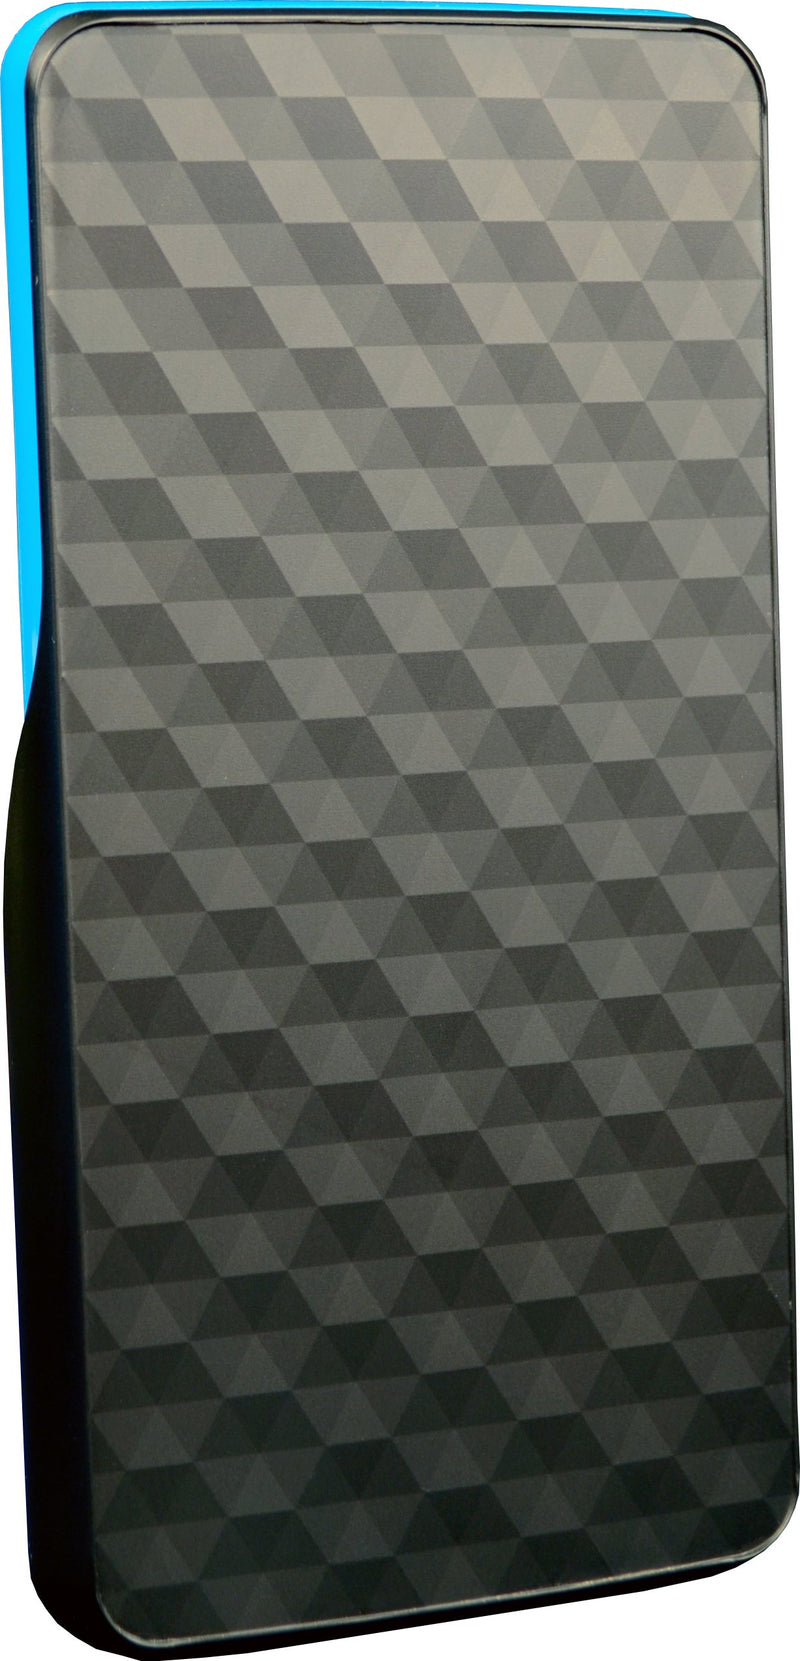 [Australia - AusPower] - Sharp Calculators EL-W535TGBBL 16-Digit Scientific Calculator with WriteView, 4 Line Display, Battery and Solar Hybrid Powered LCD Display, Black & Blue, Black, Blue, 6.4" x 3.1" x 0.6" x 6.4" 